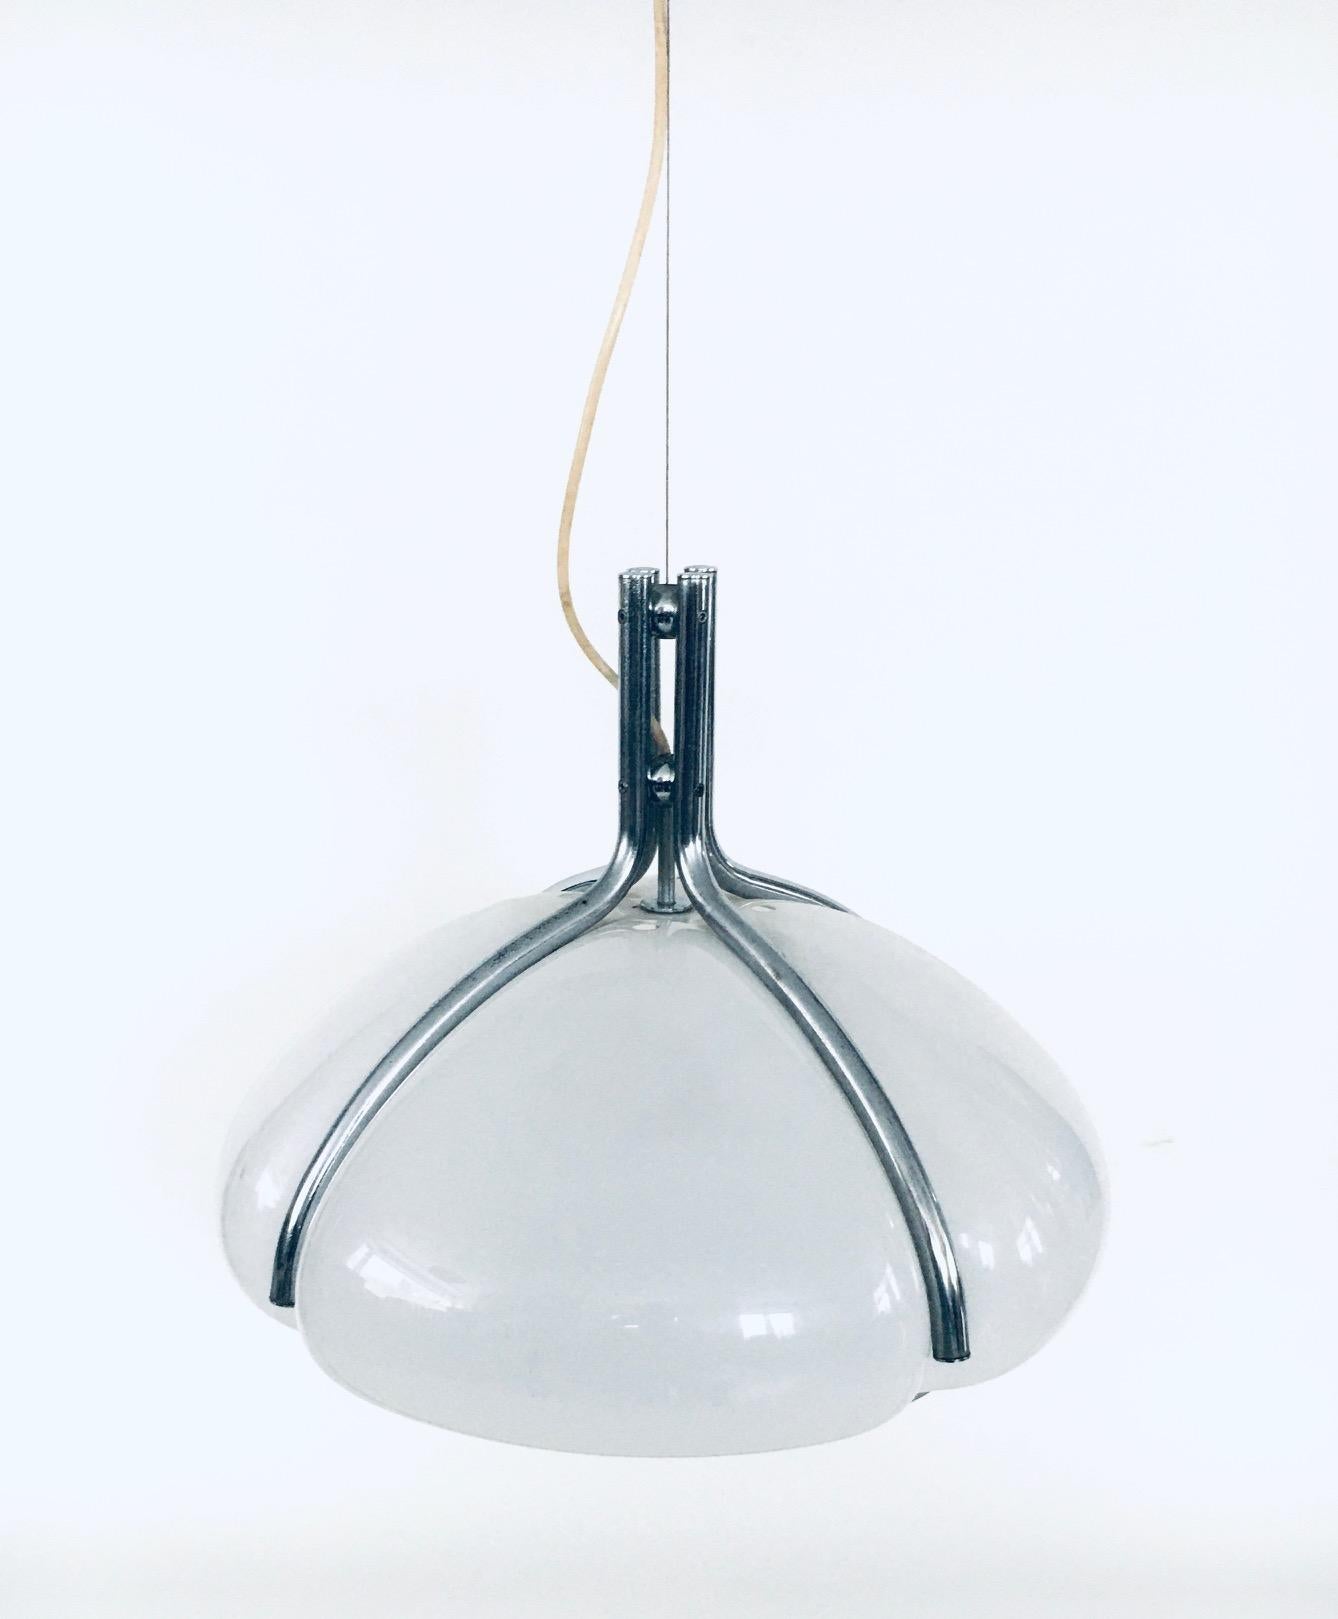 Italian Quadrifoglio Pendant Lamp by Gae Aulenti for Guzzini, Italy 1970's For Sale